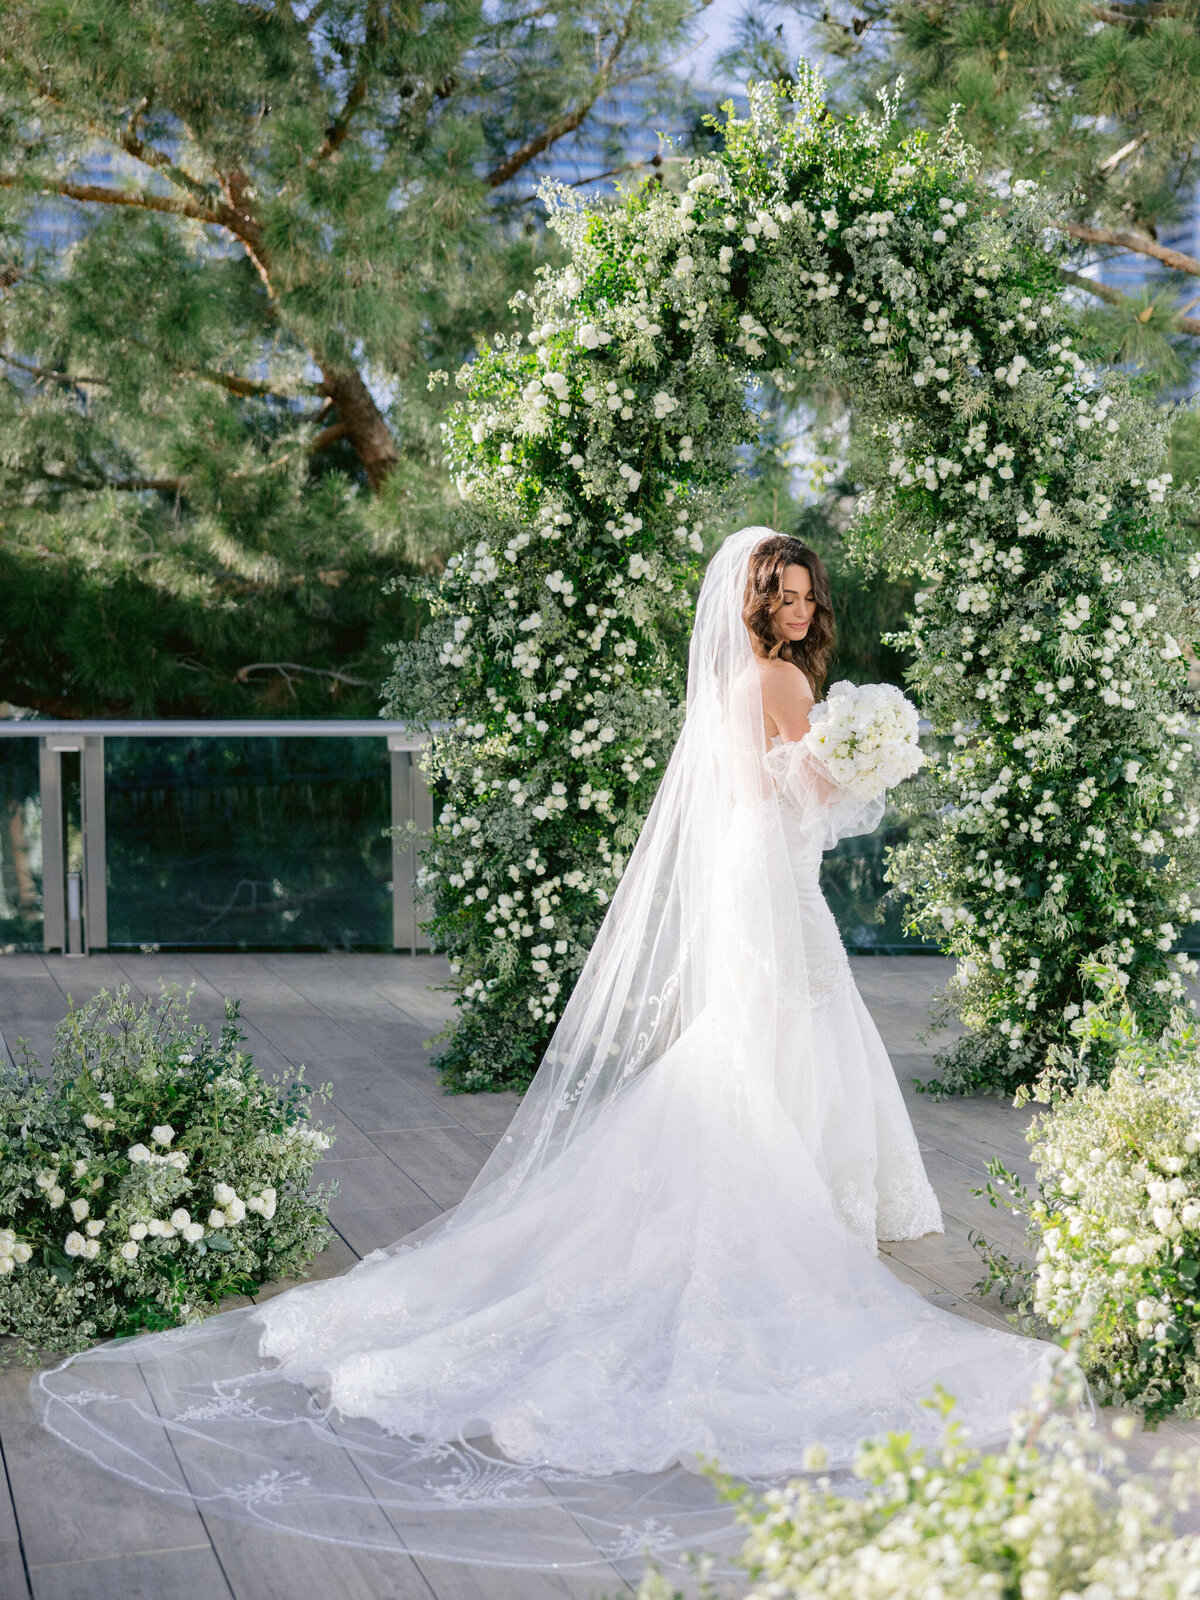 Luxurious-garden-inspired-arbor-for-wedding-ceremony